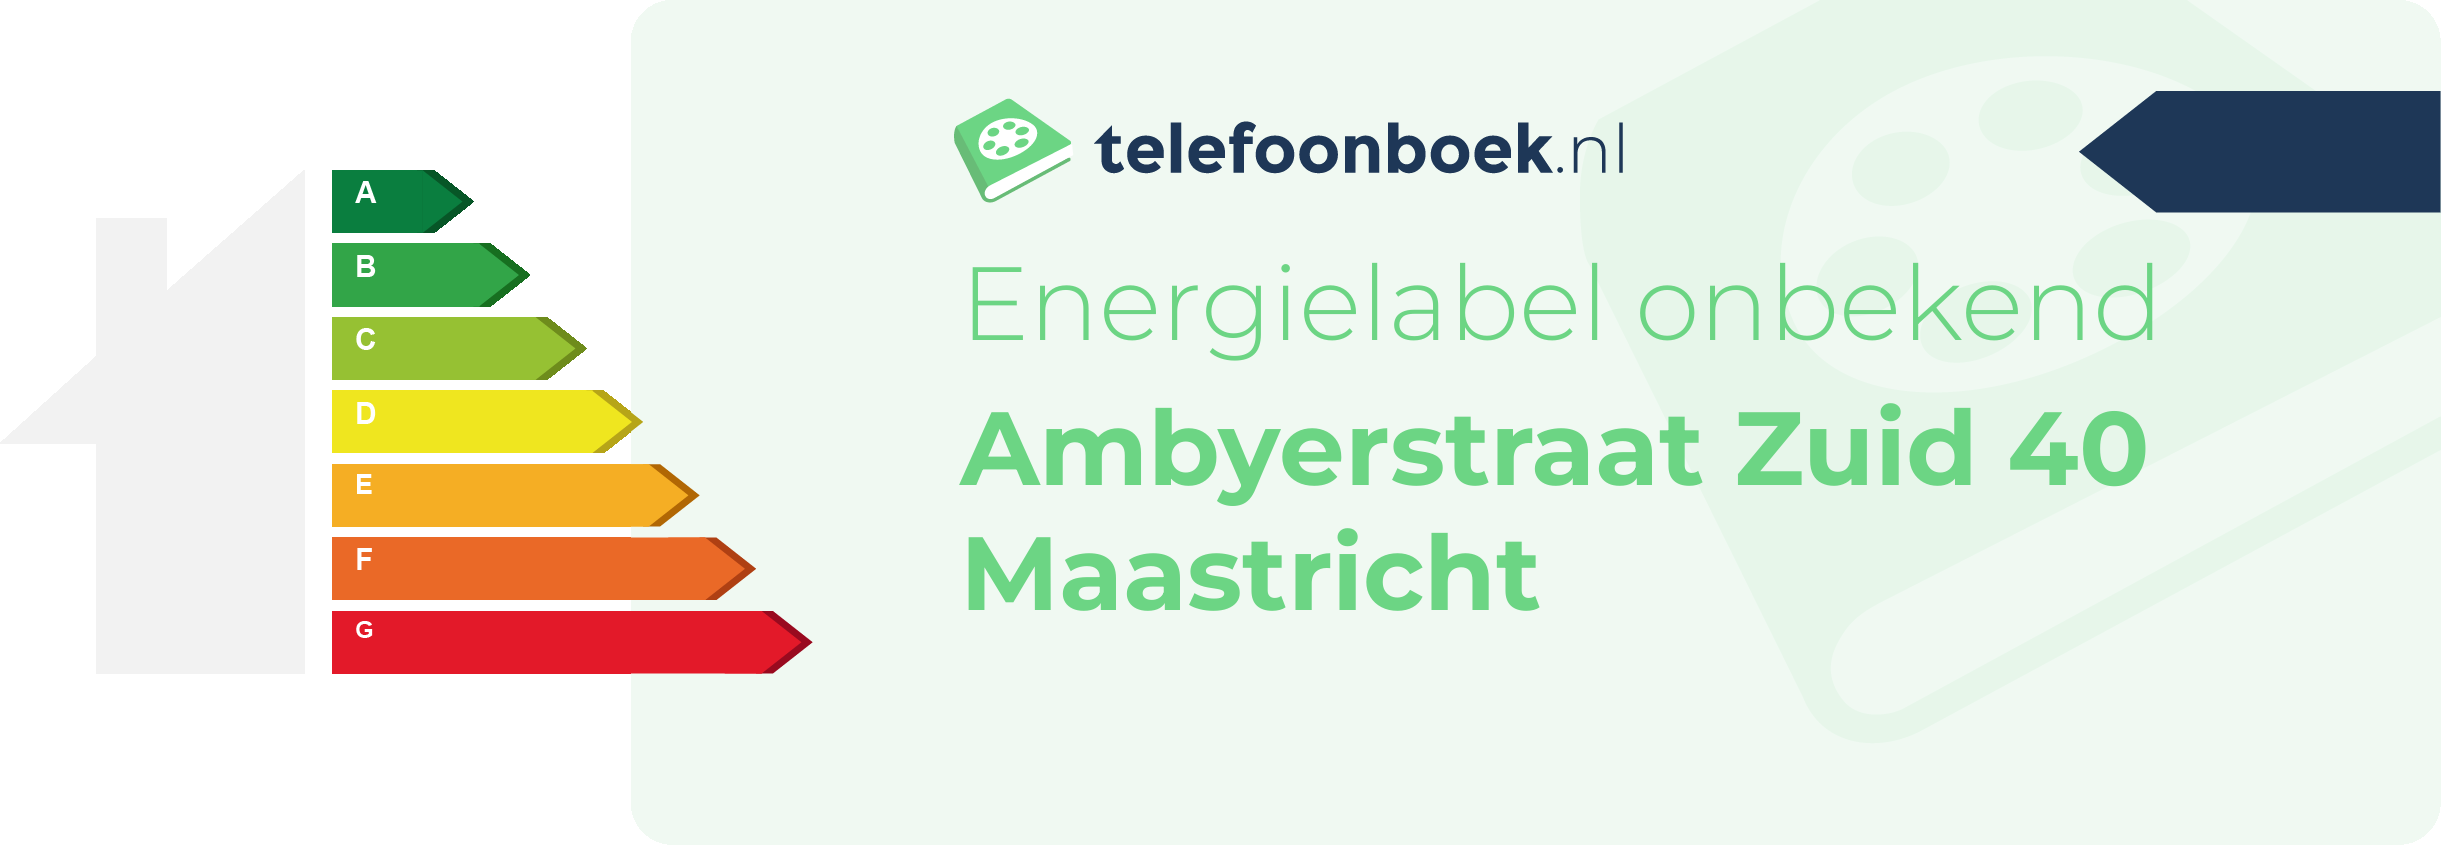 Energielabel Ambyerstraat Zuid 40 Maastricht